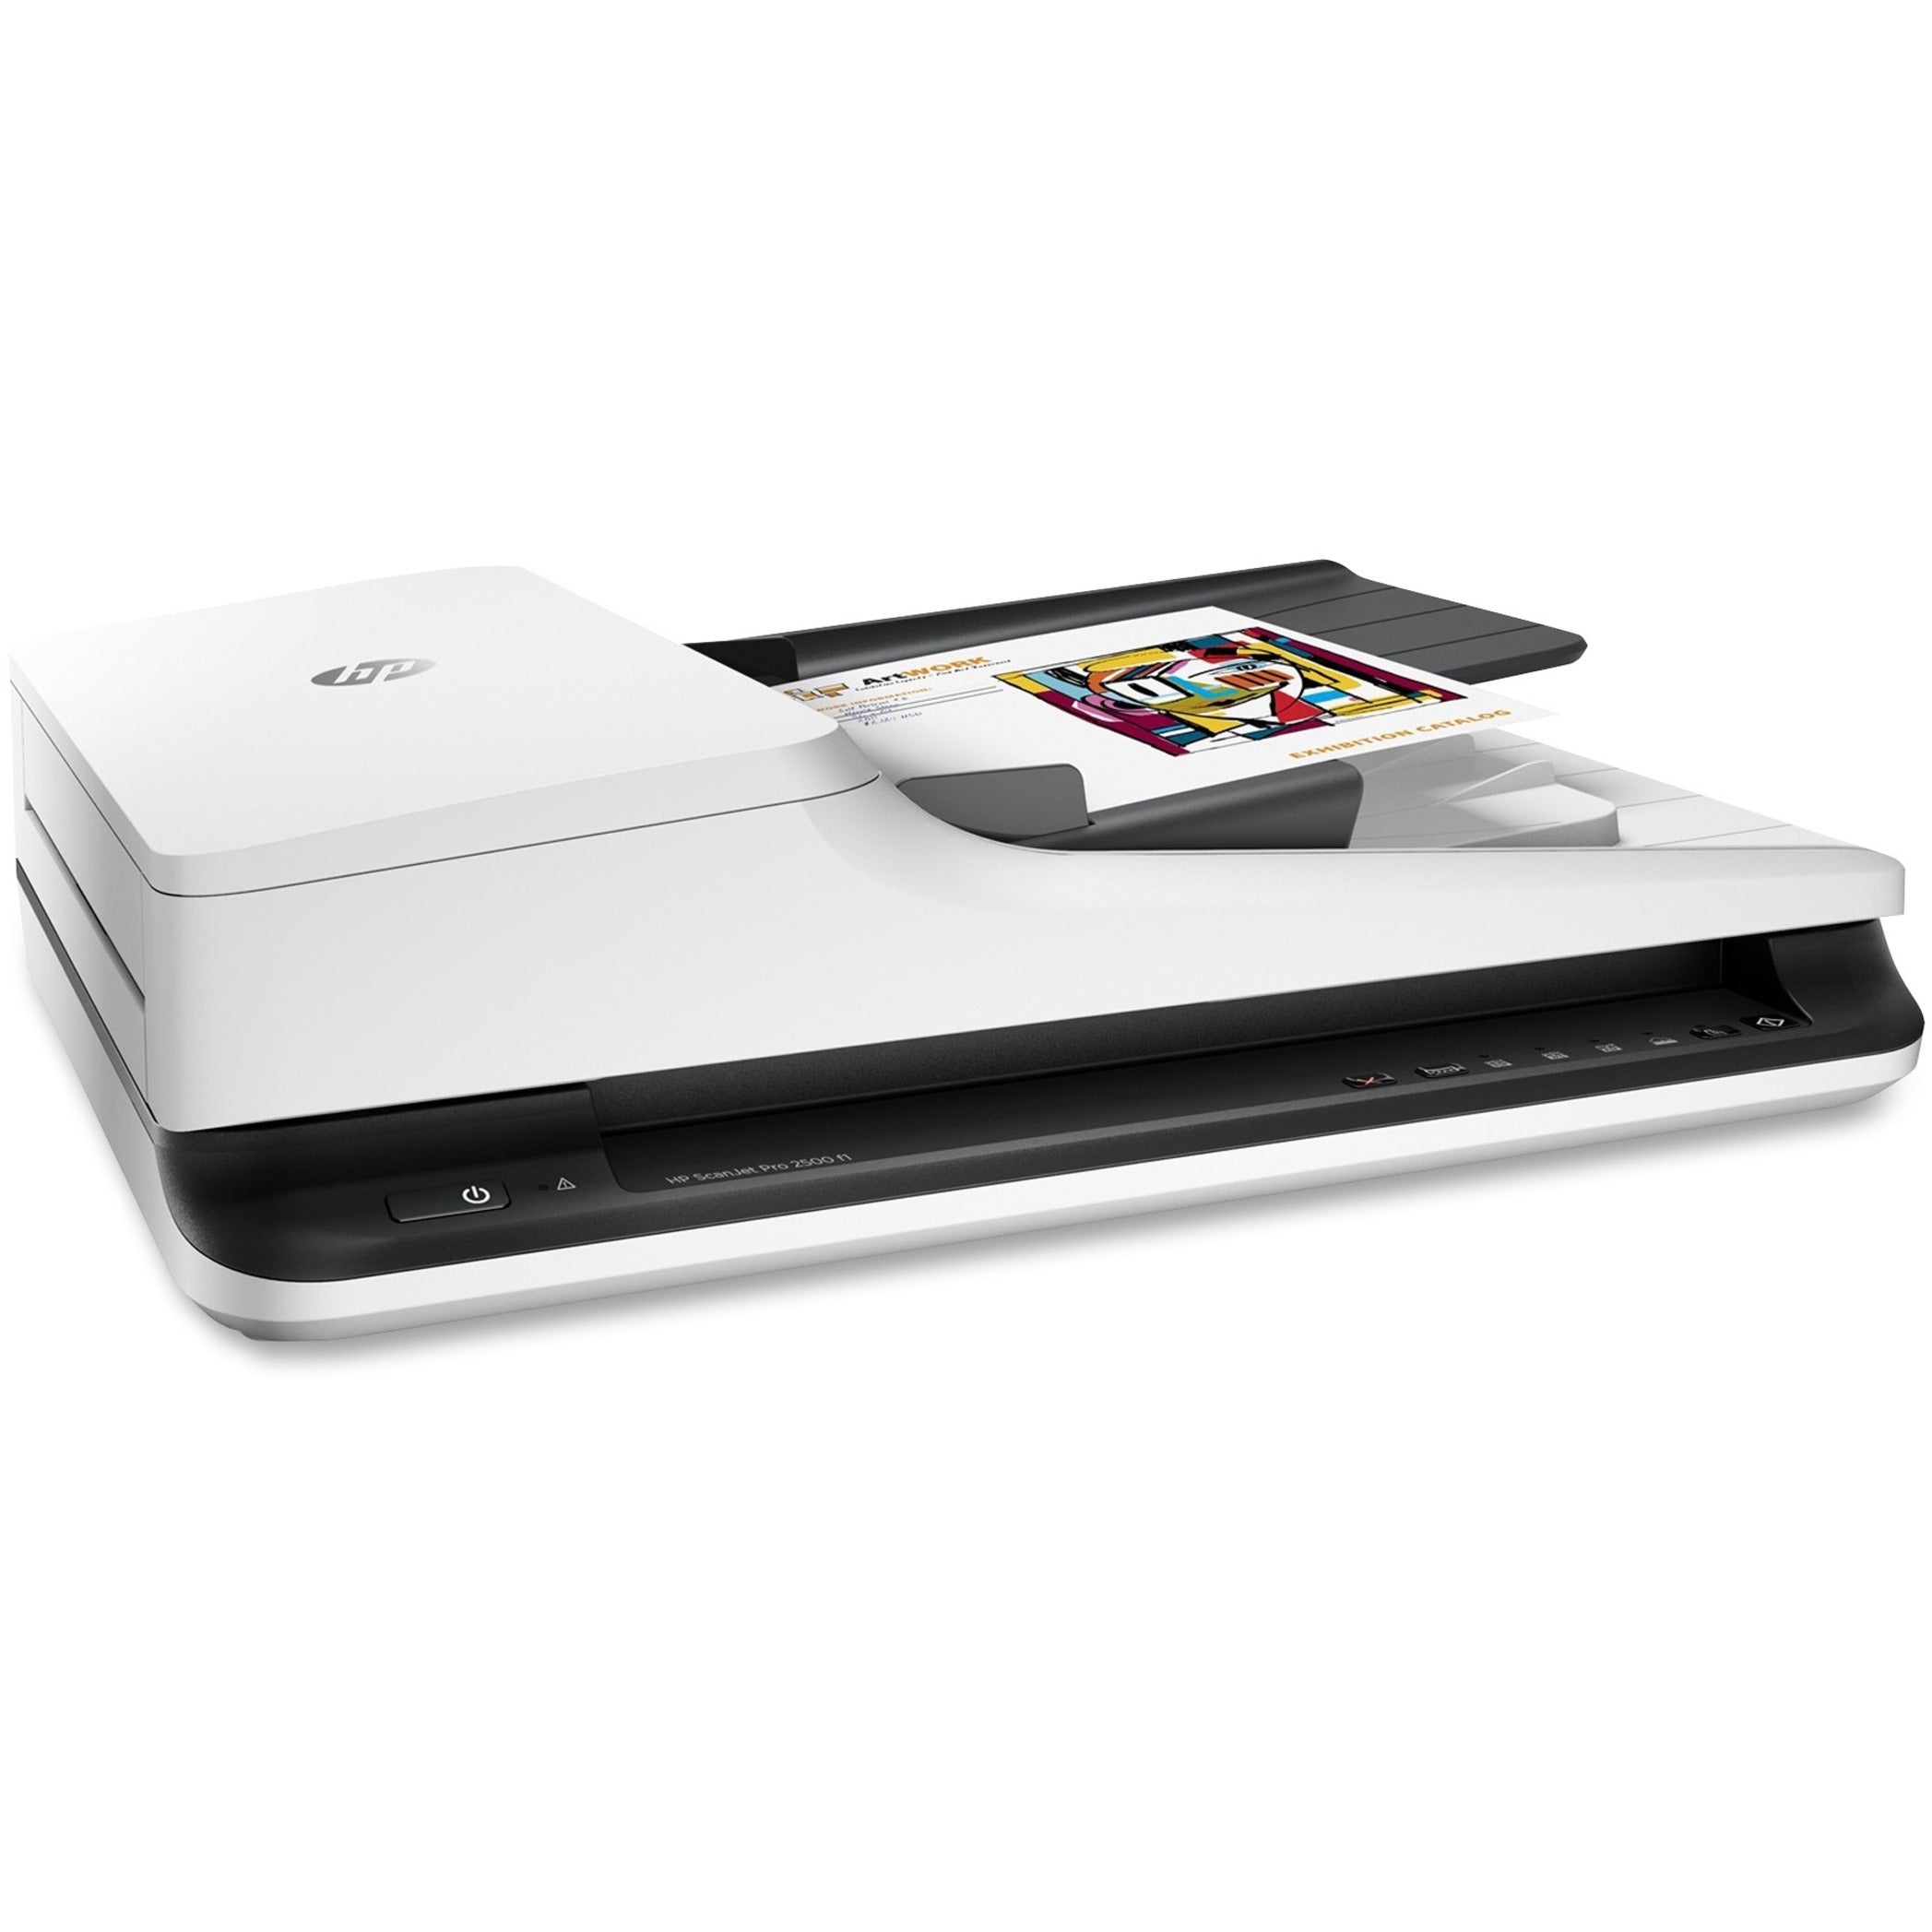 HP L2747A ScanJet Pro 2500 f1 Flatbed Scanner - High-Quality Color Scanning, Duplex Scanning, USB Connectivity